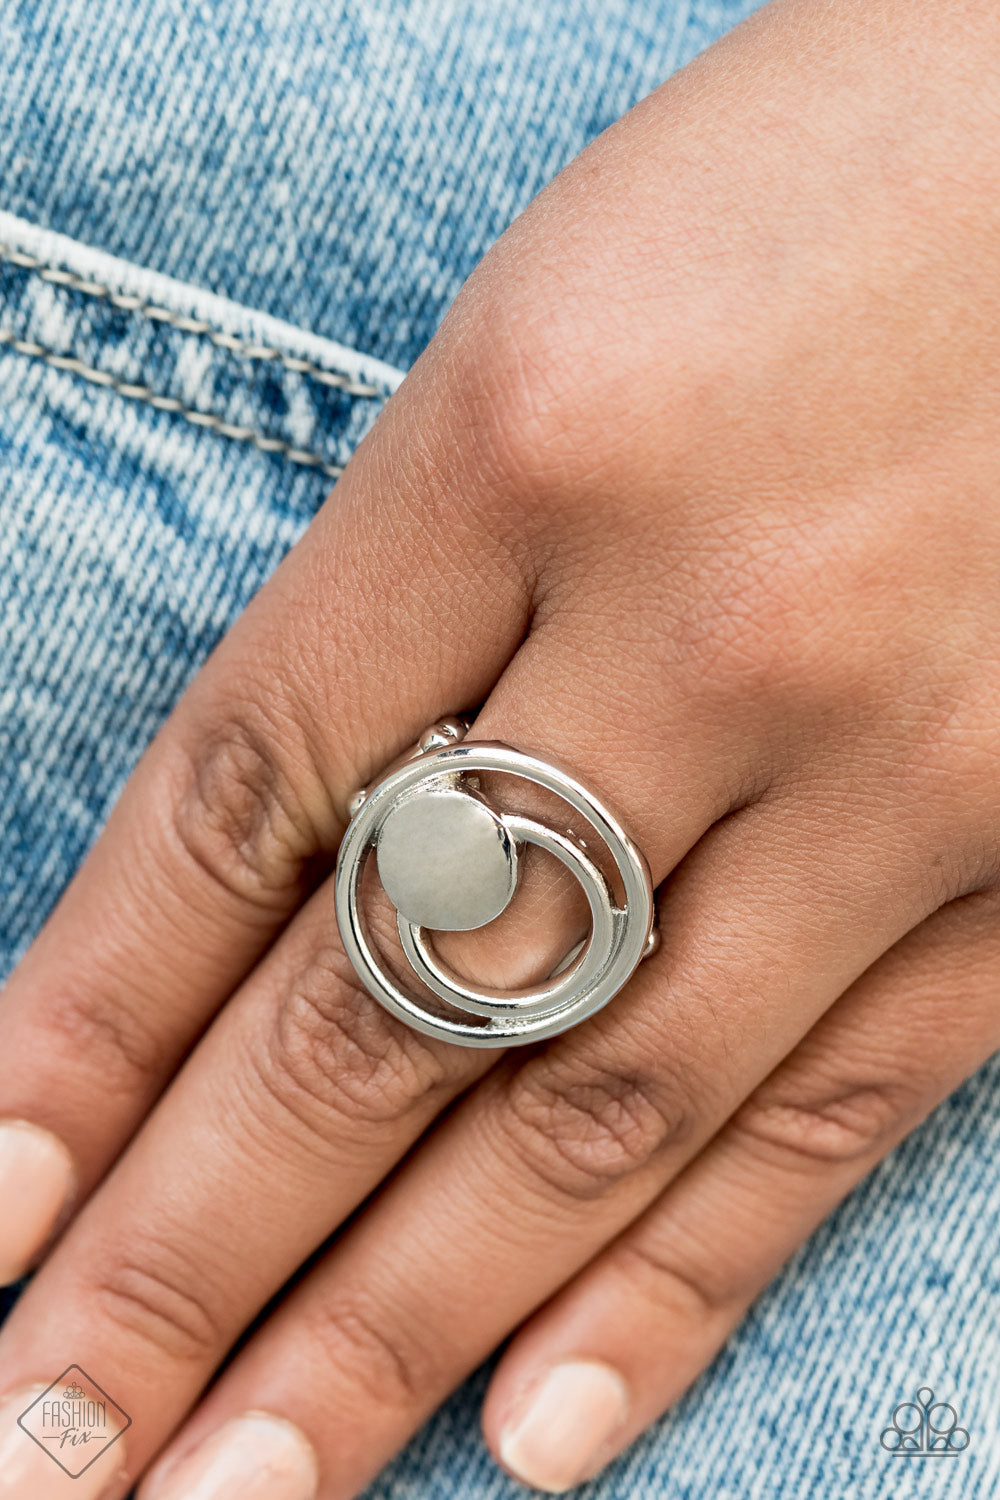 Paparazzi Ring ~ Edgy Eclipse -Fashion Fix Oct2020 - Silver